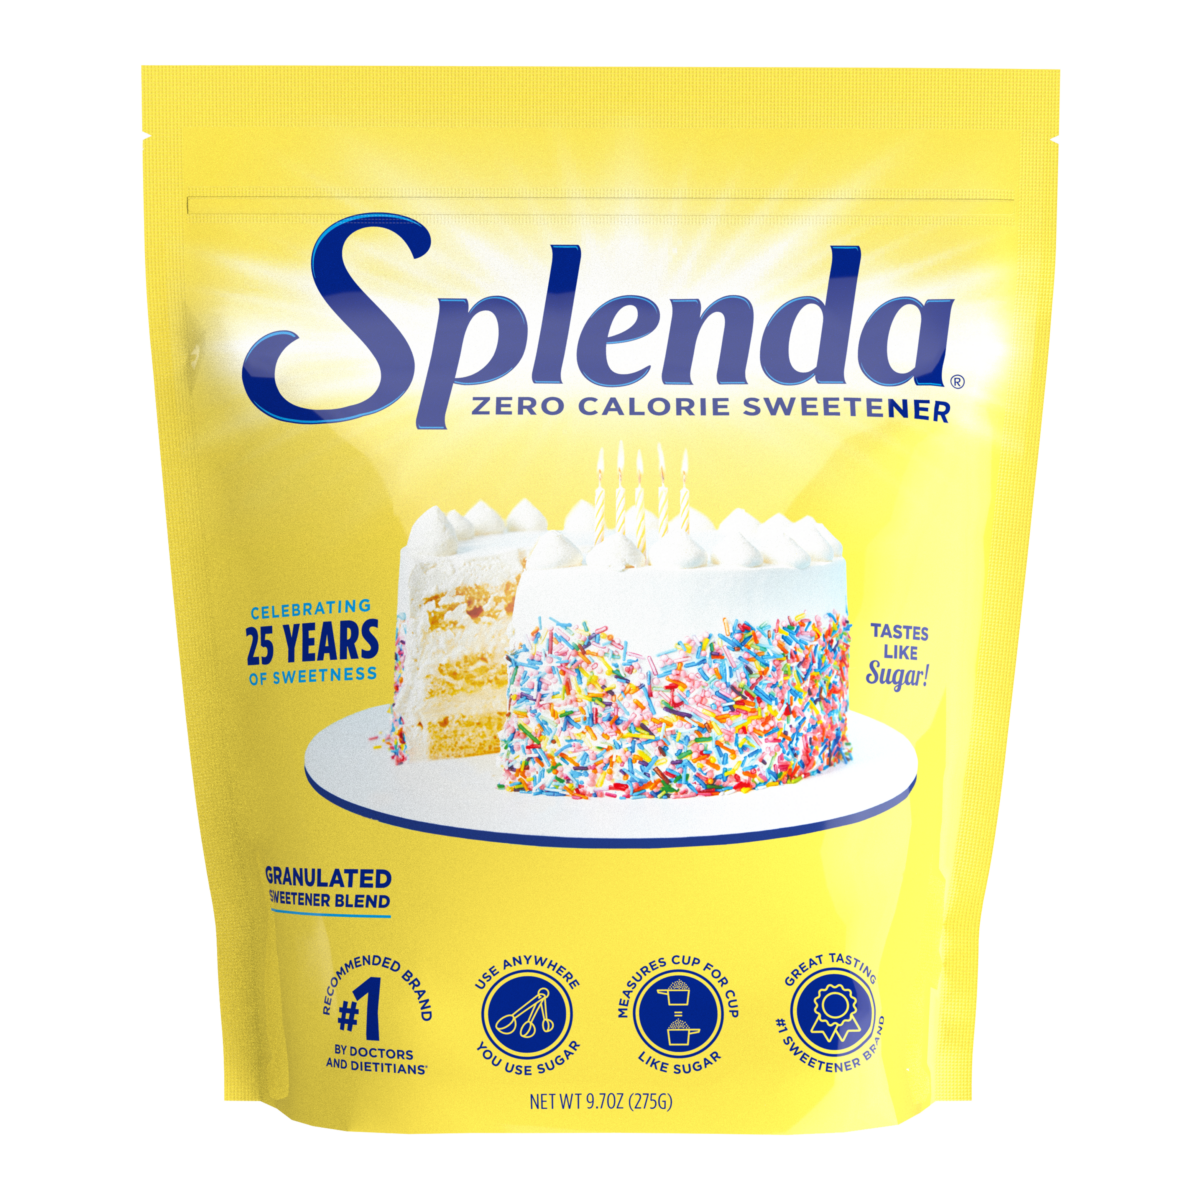 Splenda Granulated Sweetener Limited Edition 25th Birthday Packaging - Front